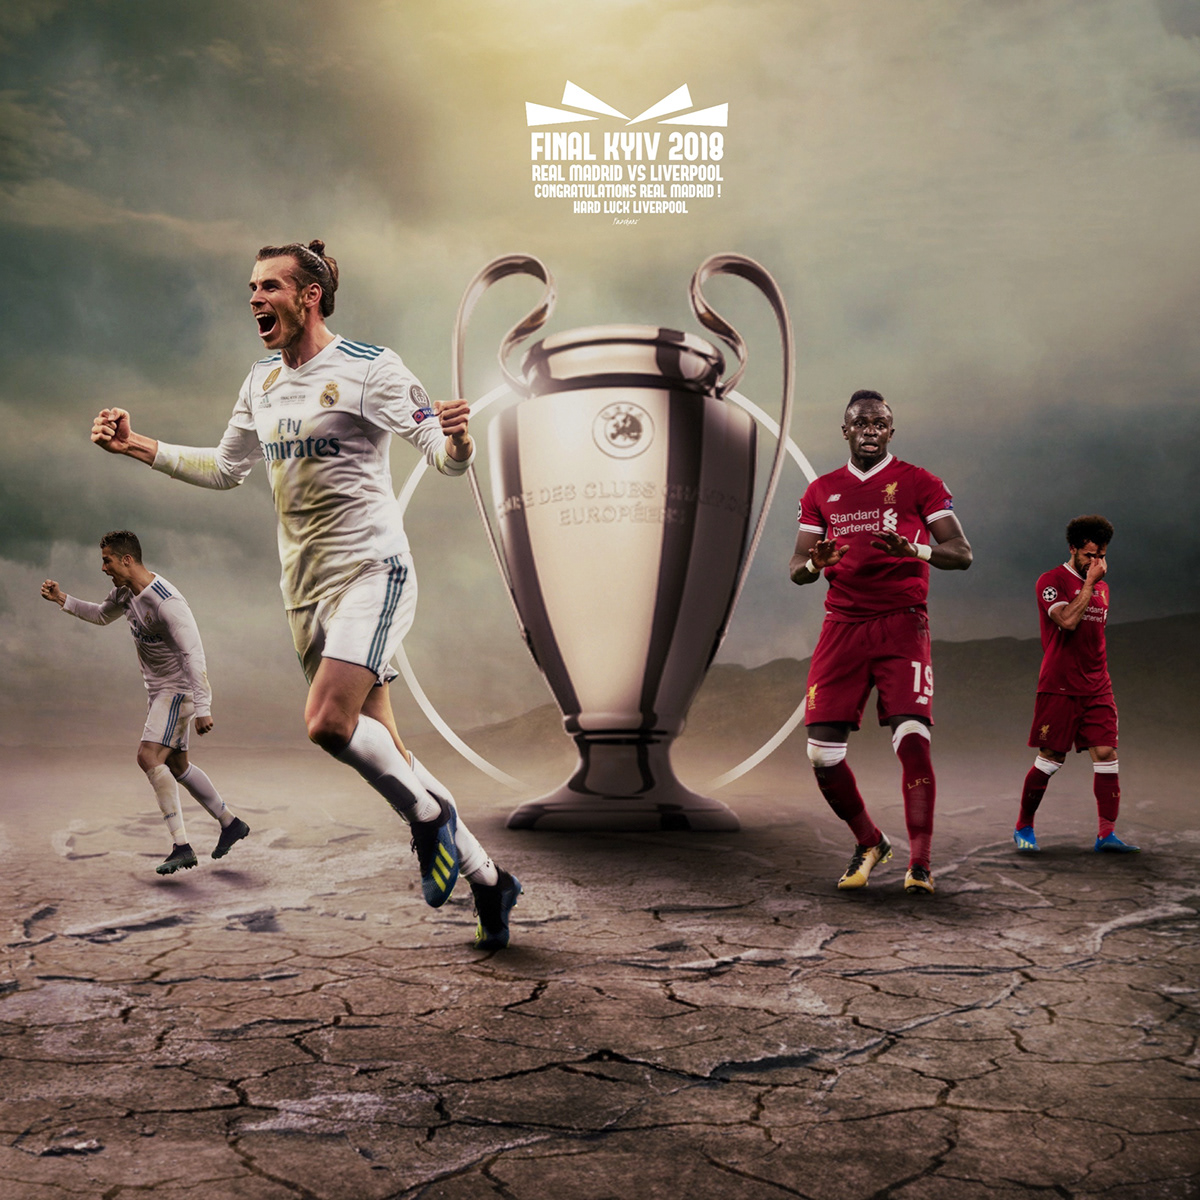 cristiano ronaldo Derby football Liverpool Mo Salah Real Madrid soccer social media UEFA Champions League World Cup 2018